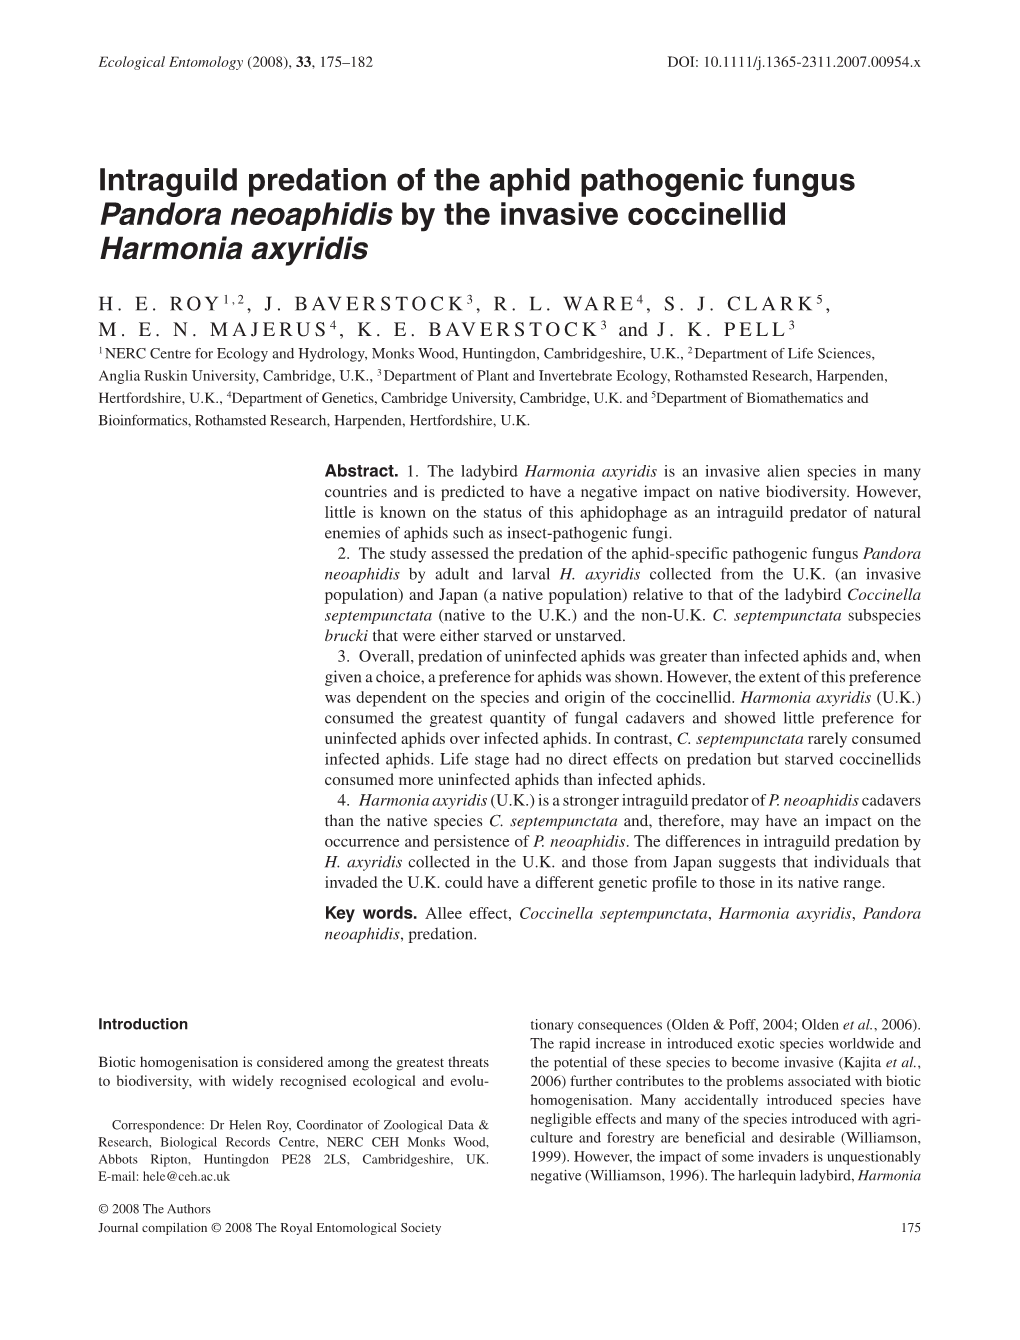 Intraguild Predation of the Aphid Pathogenic Fungus Pandora Neoaphidis by the Invasive Coccinellid Harmonia Axyridis